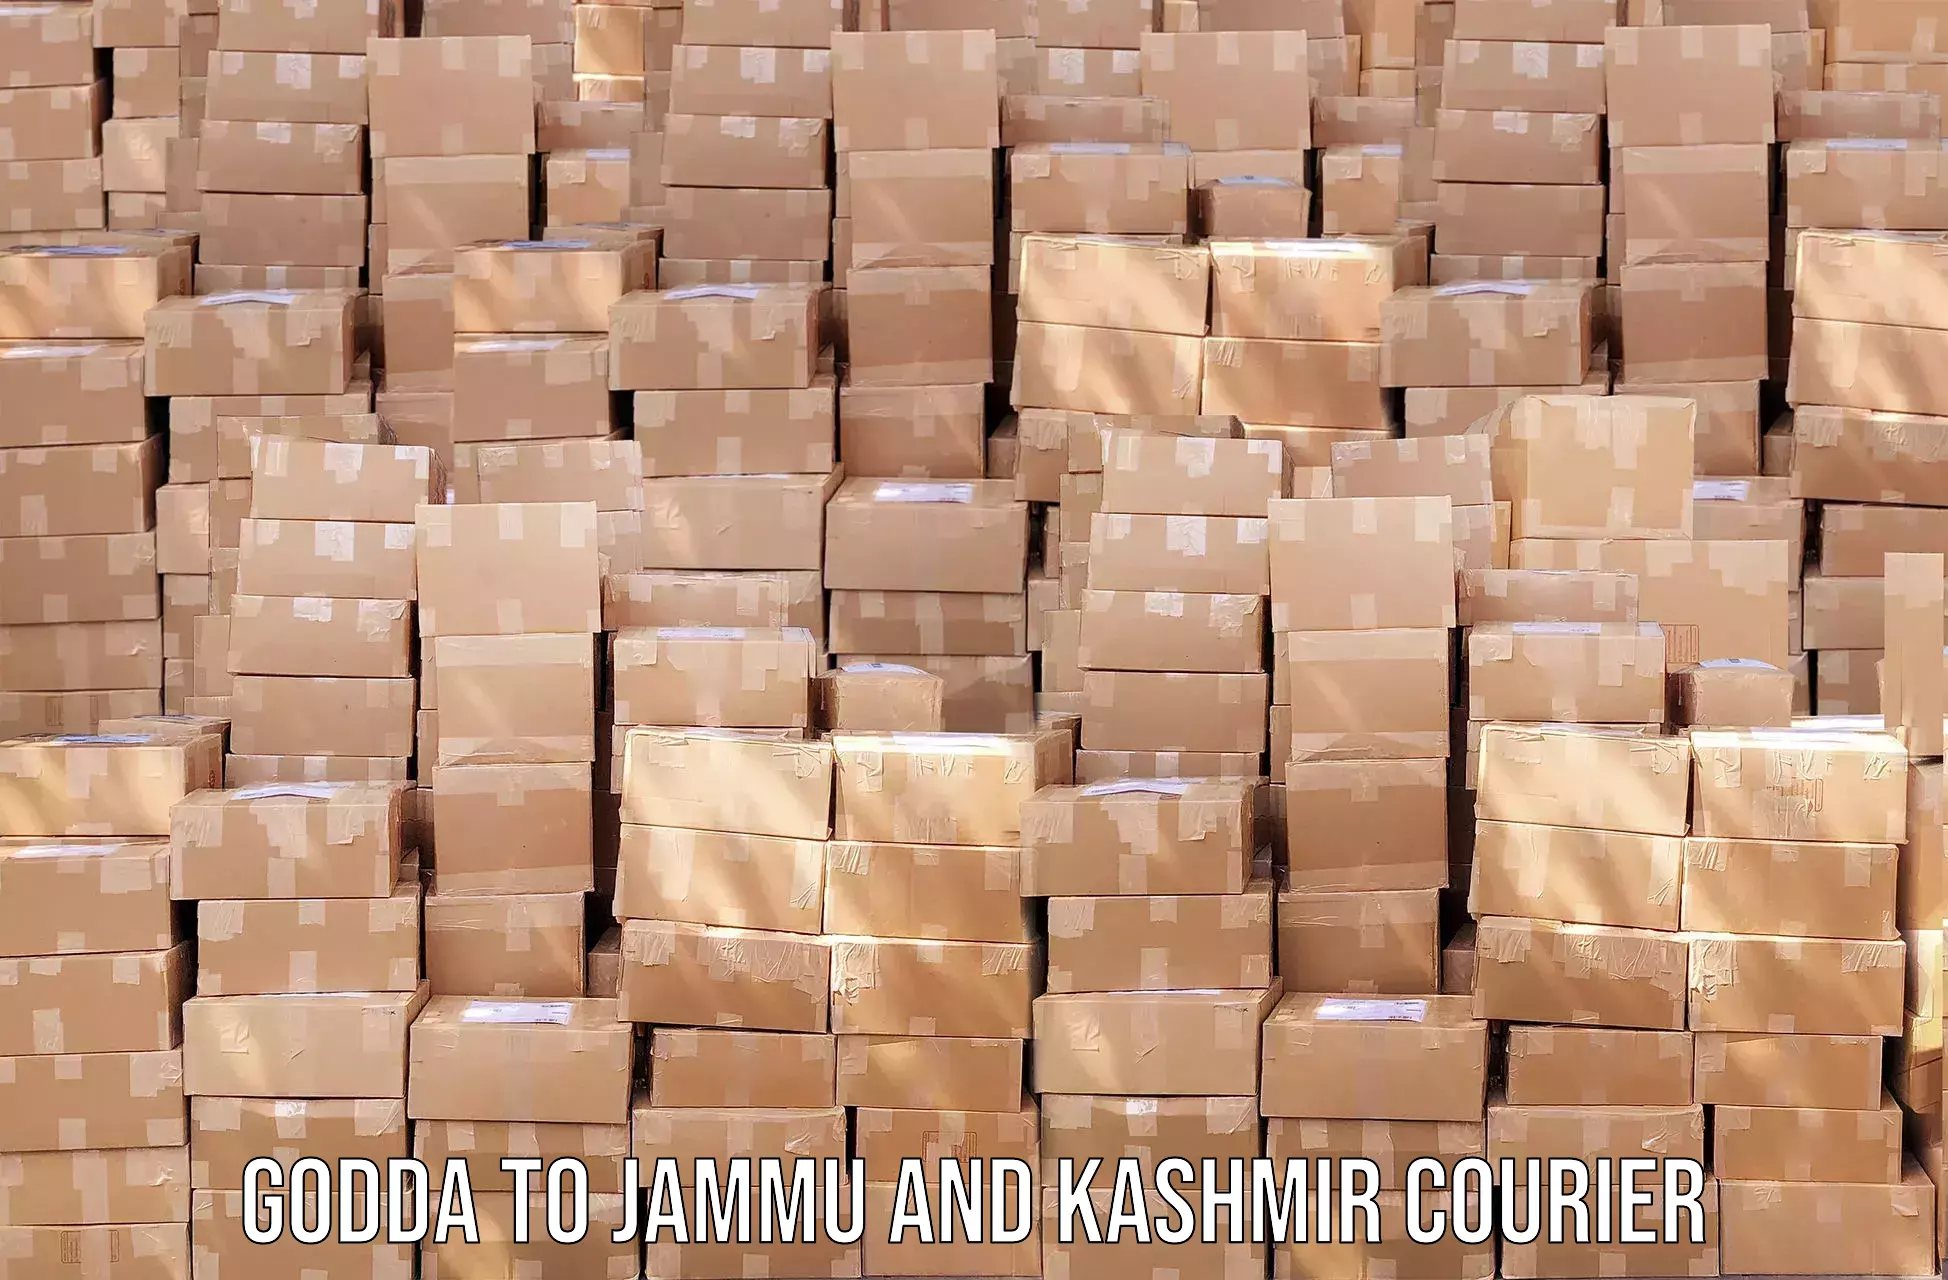 High-speed parcel service Godda to Bandipur